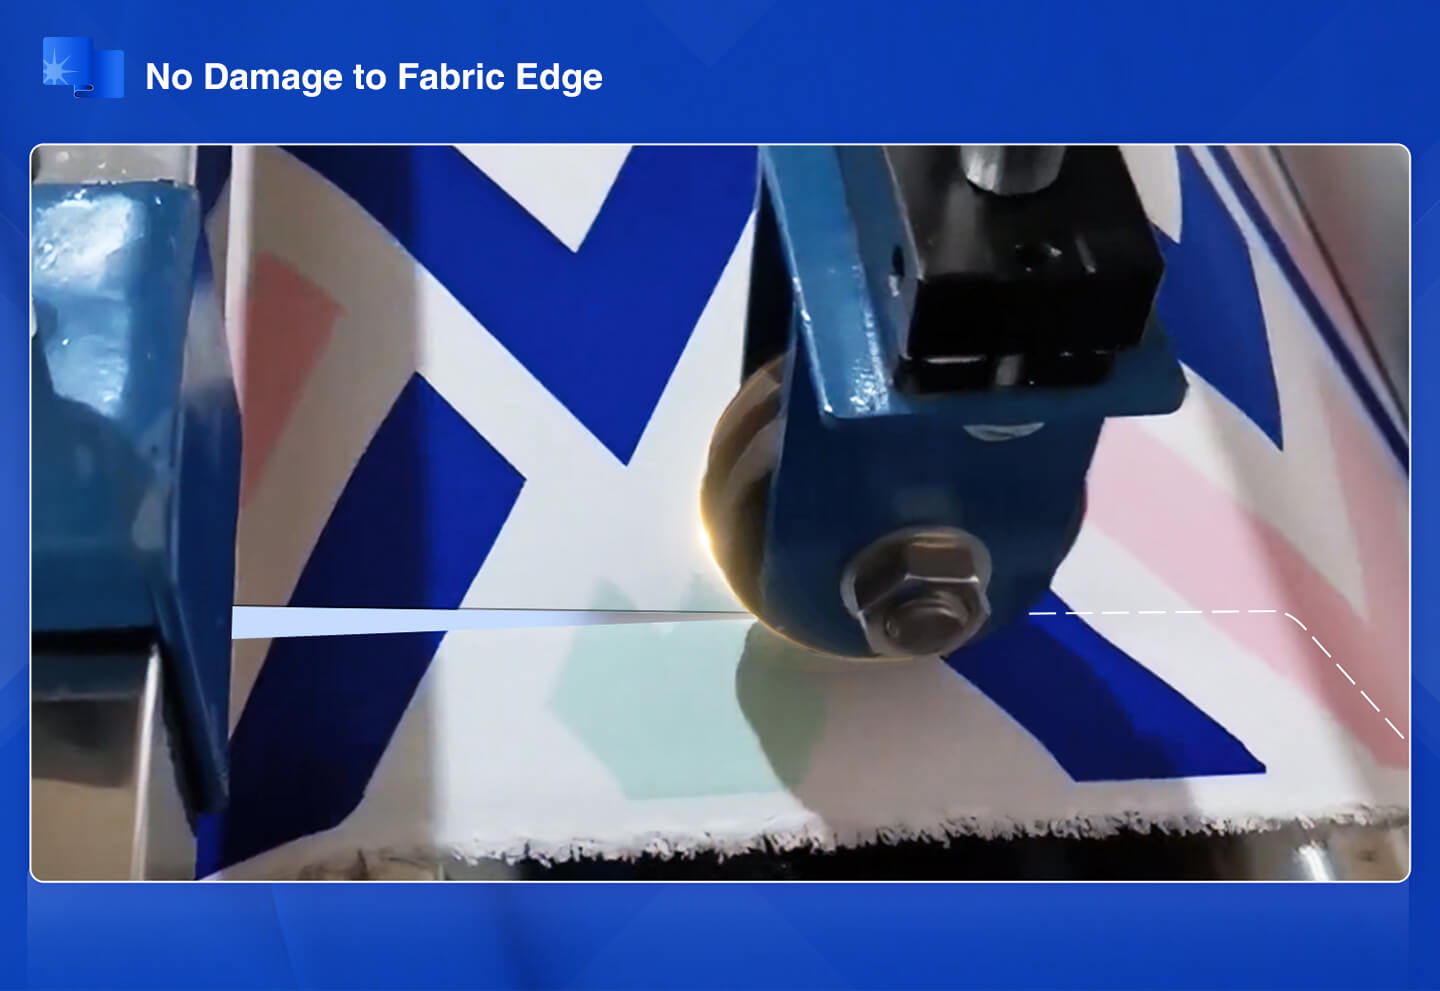 Ultrasonic Fabric Cutting Machine no damage to fabric edge